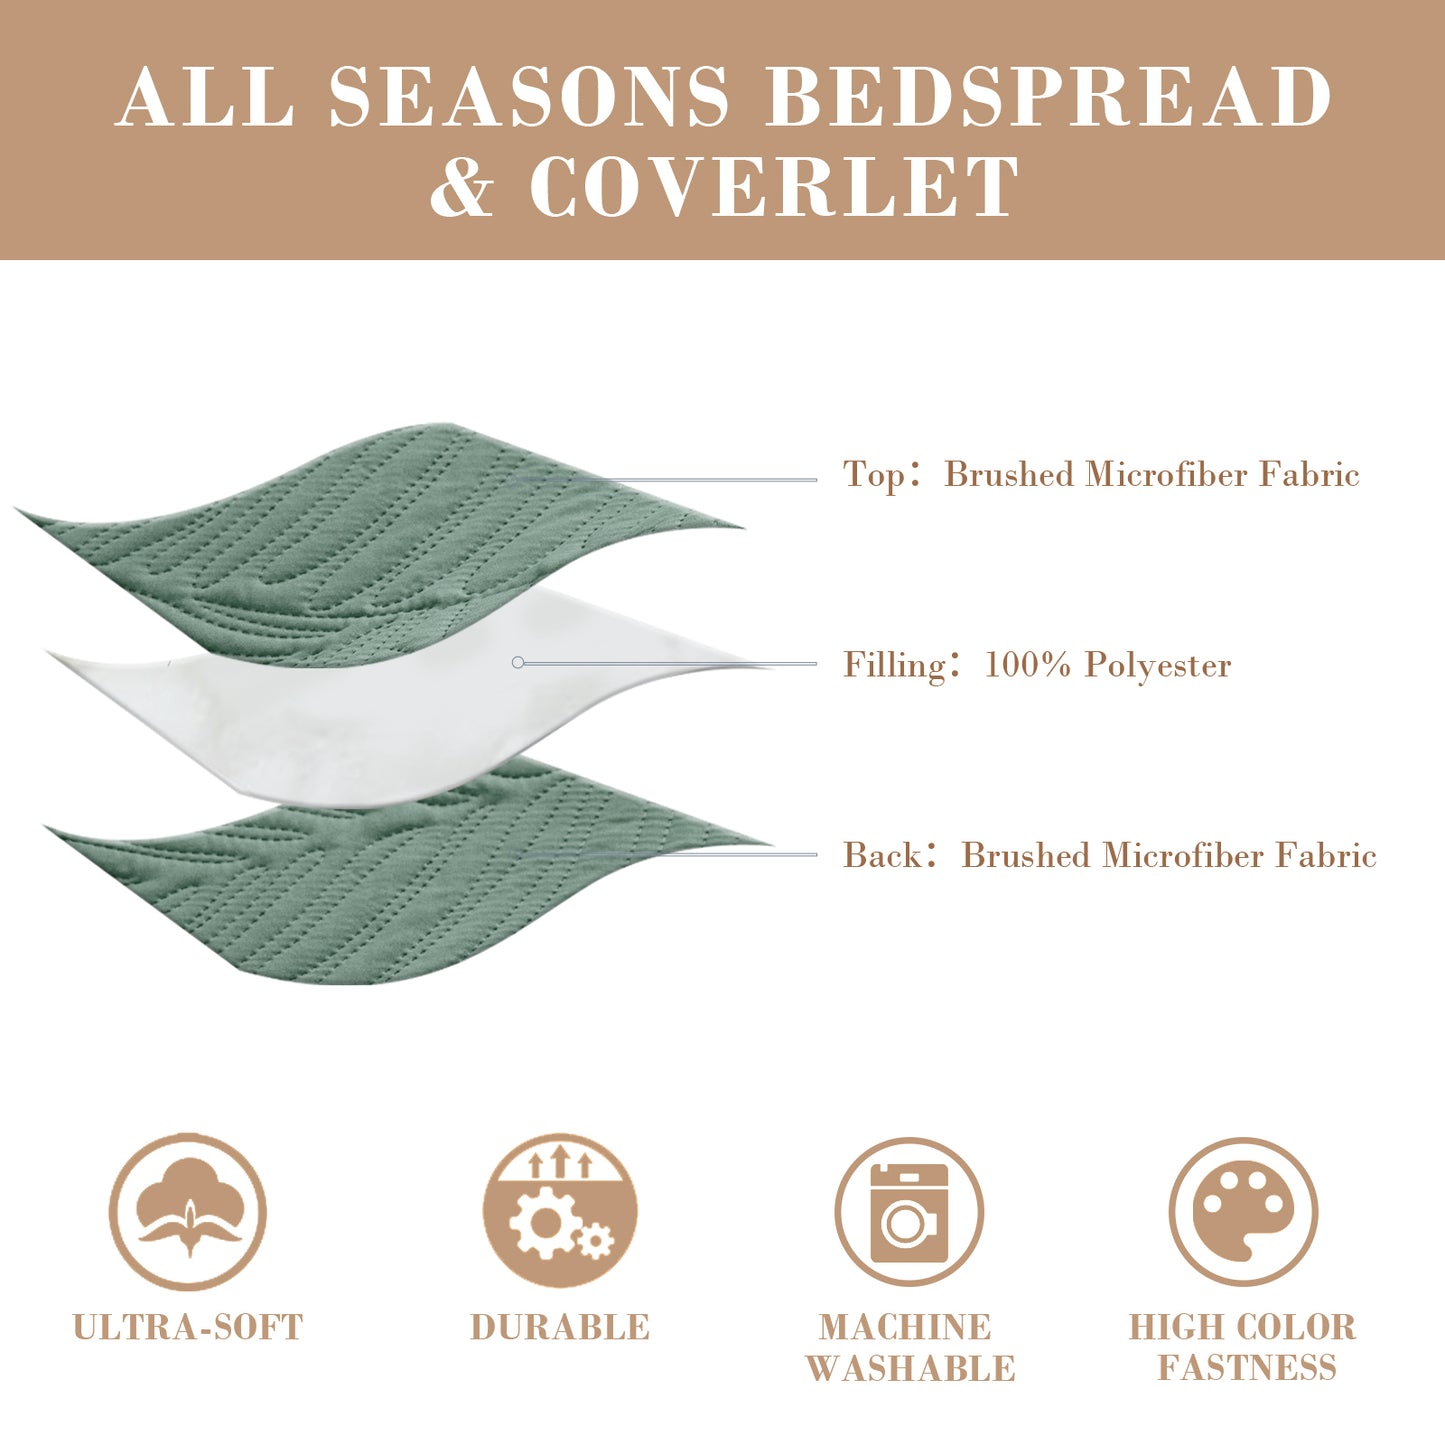 Exclusivo Mezcla California King Quilt Set Green, Lightweight Bedspread Leaf Pattern Bed Cover Soft Coverlet Bedding Set(1 Quilt, 2 Pillow Shams)